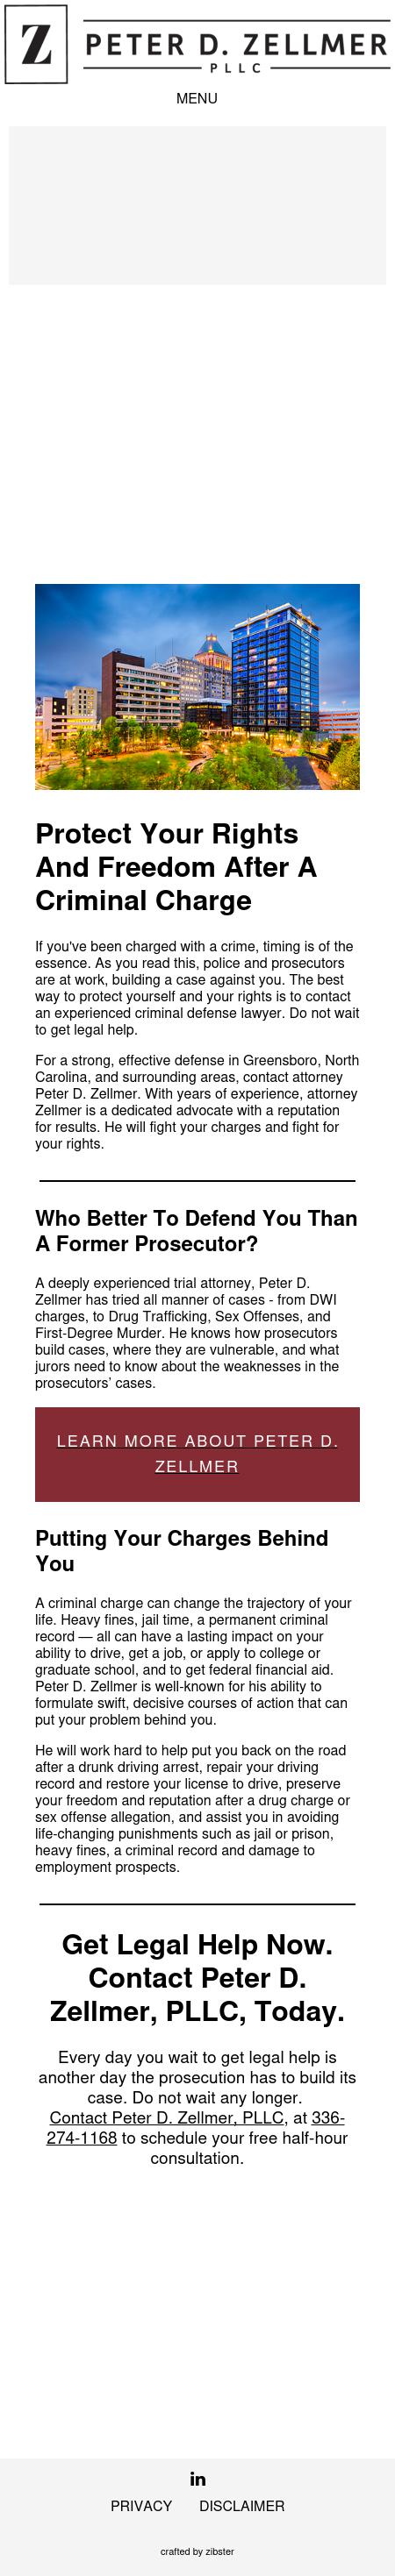 Peter D. Zellmer, PLLC - Greensboro NC Lawyers